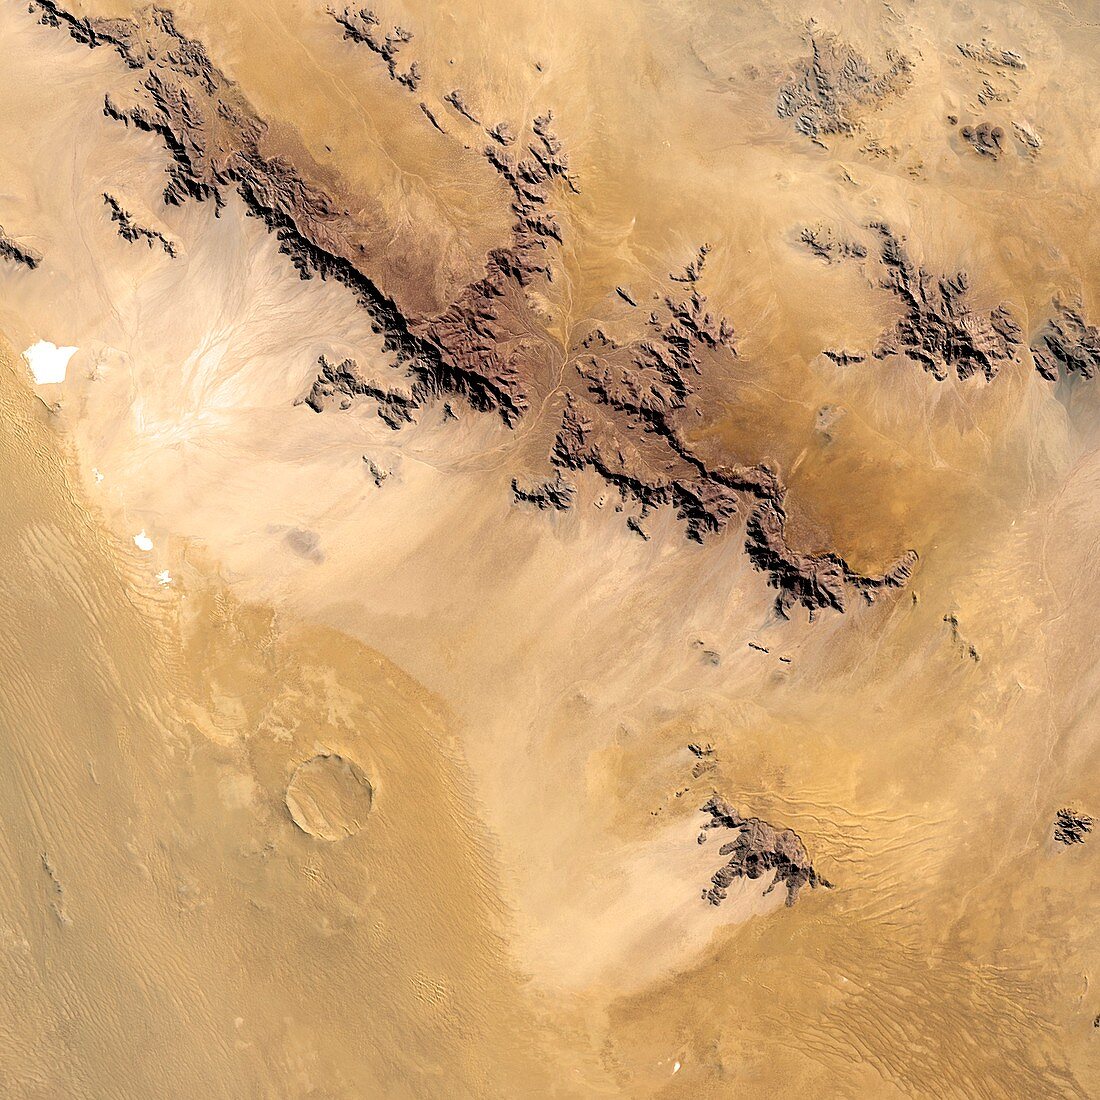 Roter Kamm crater,satellite image